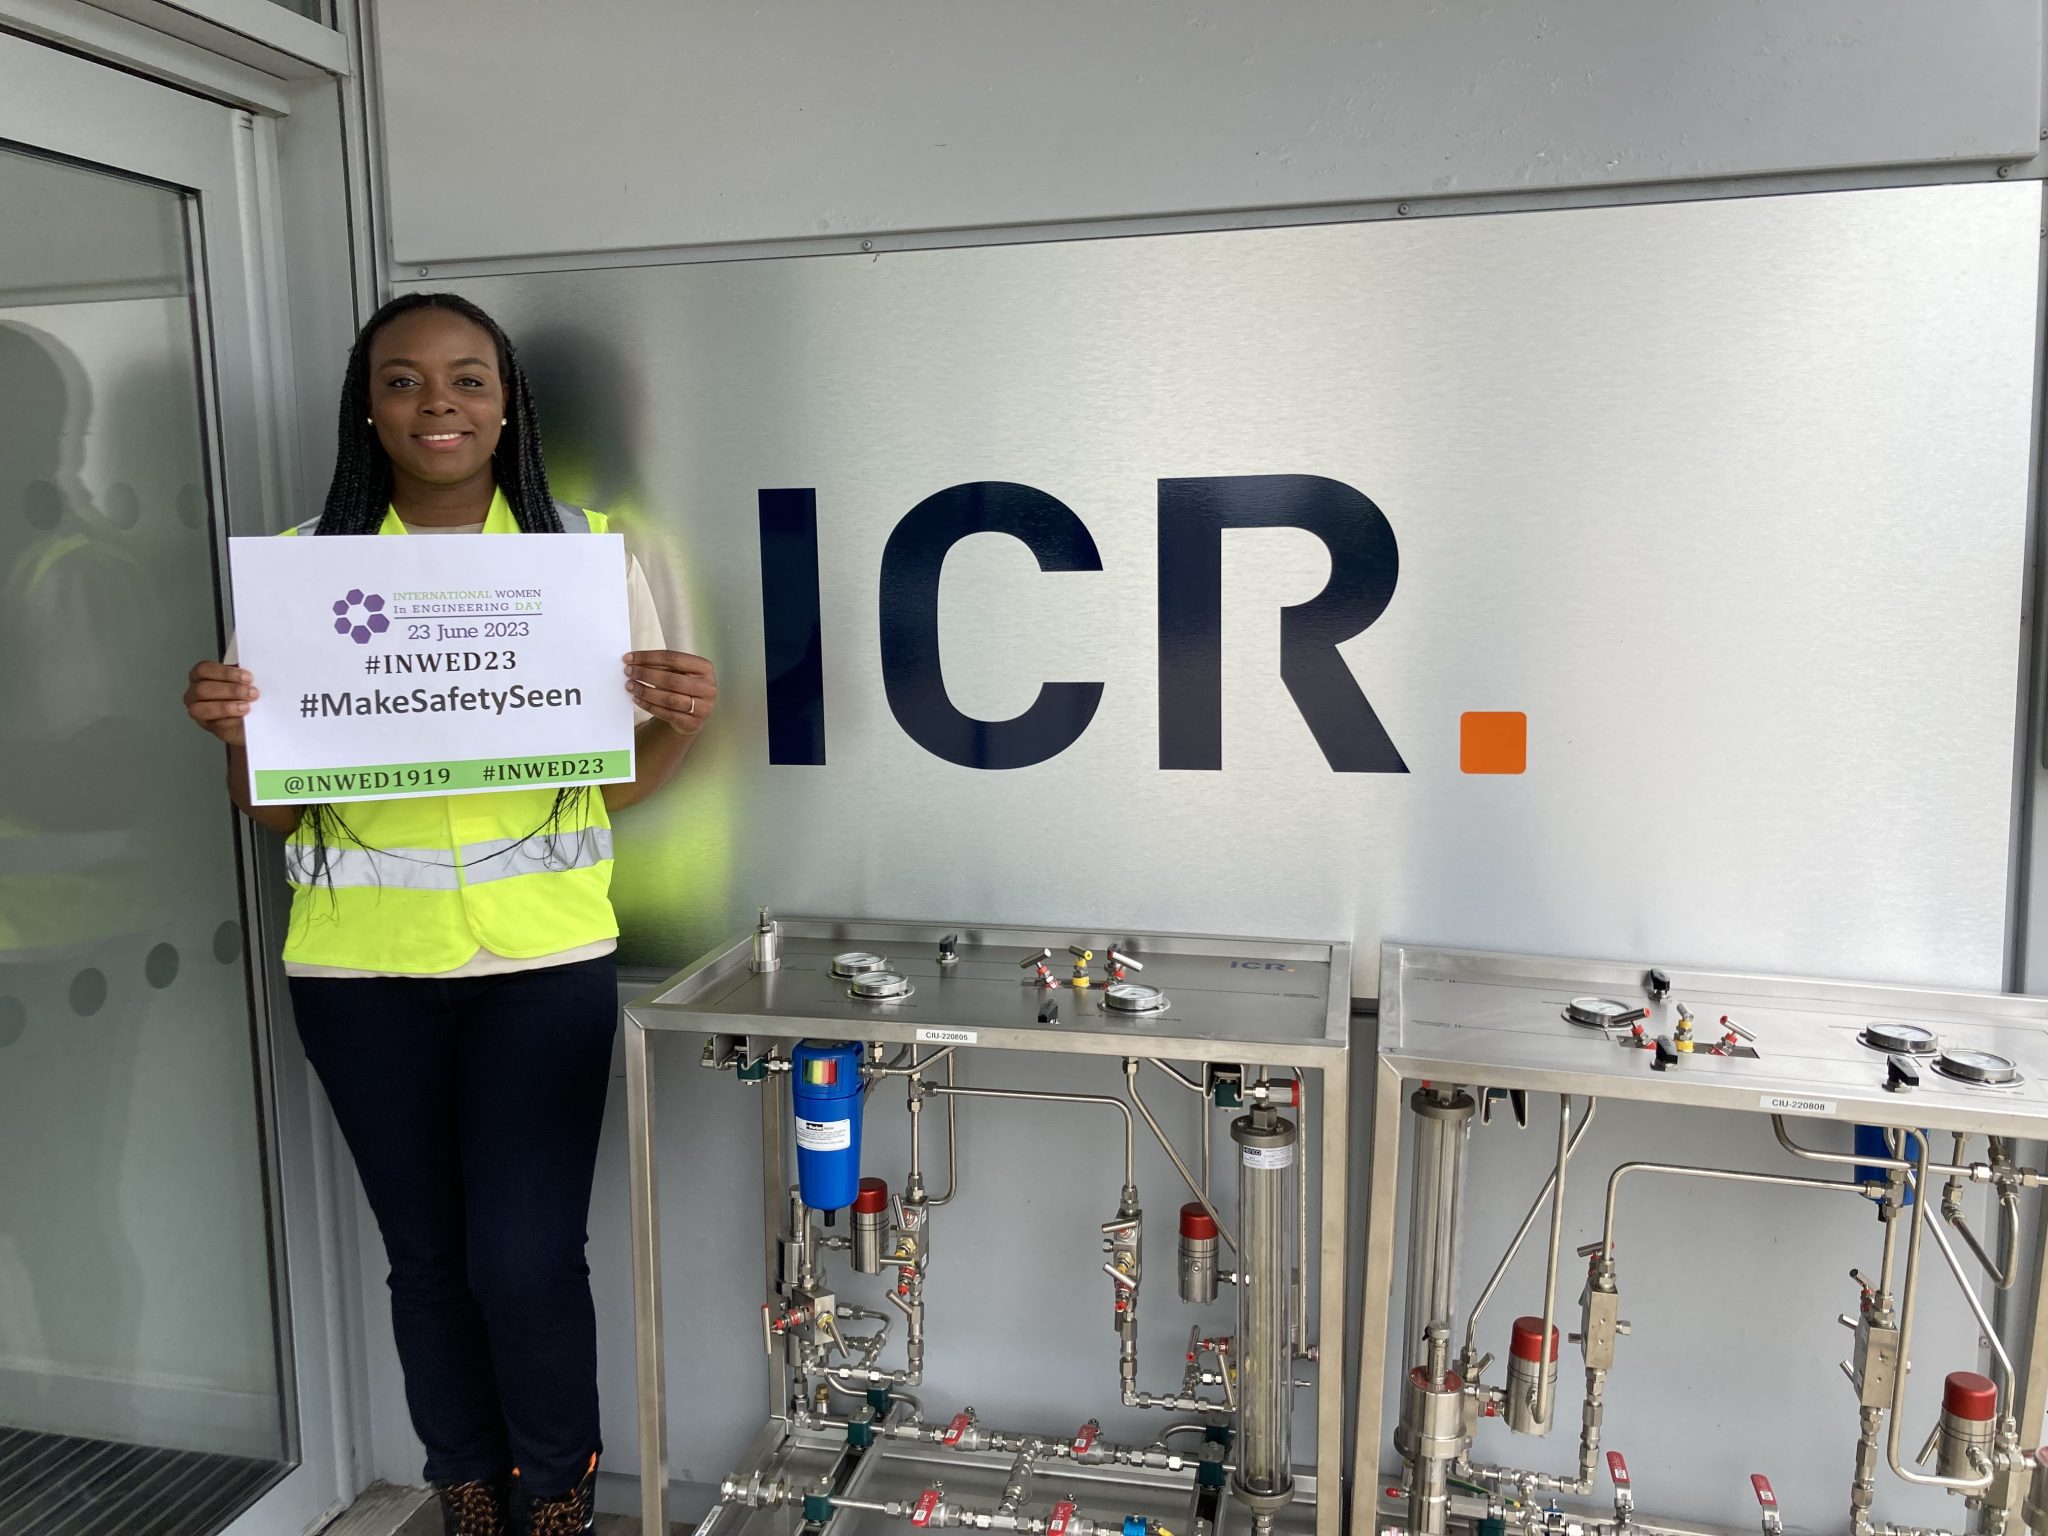 Kaletatikor Unwene, graduate project engineer, chemical injection team at ICR Group